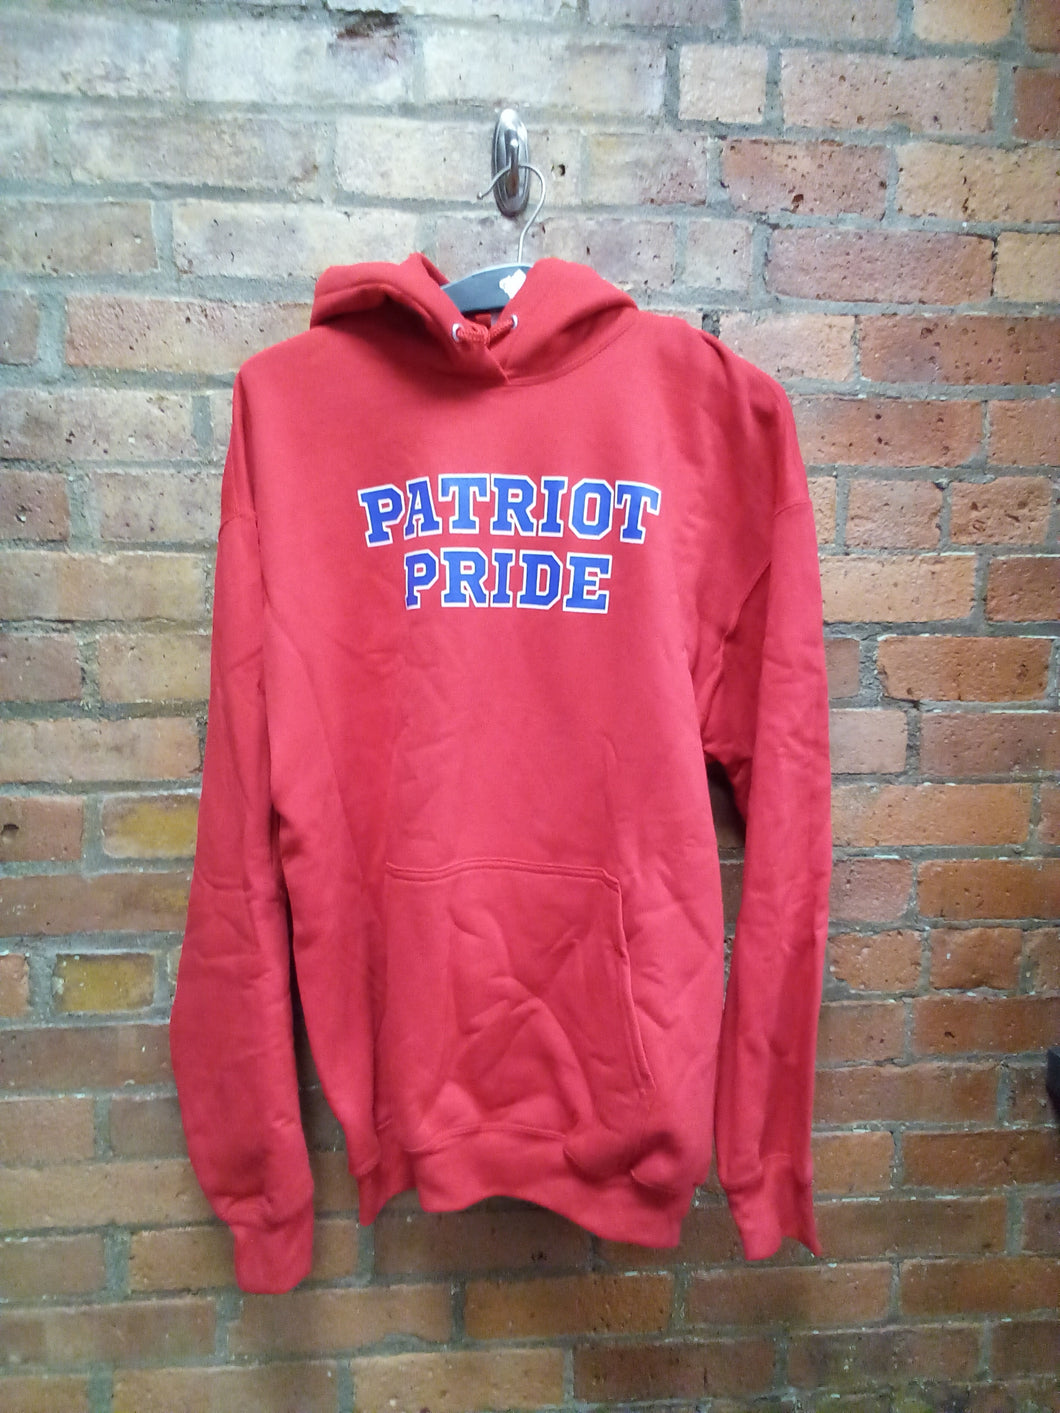 CLEARANCE - Schenectady Patriot Pride Hooded Sweatshirt - Size XL